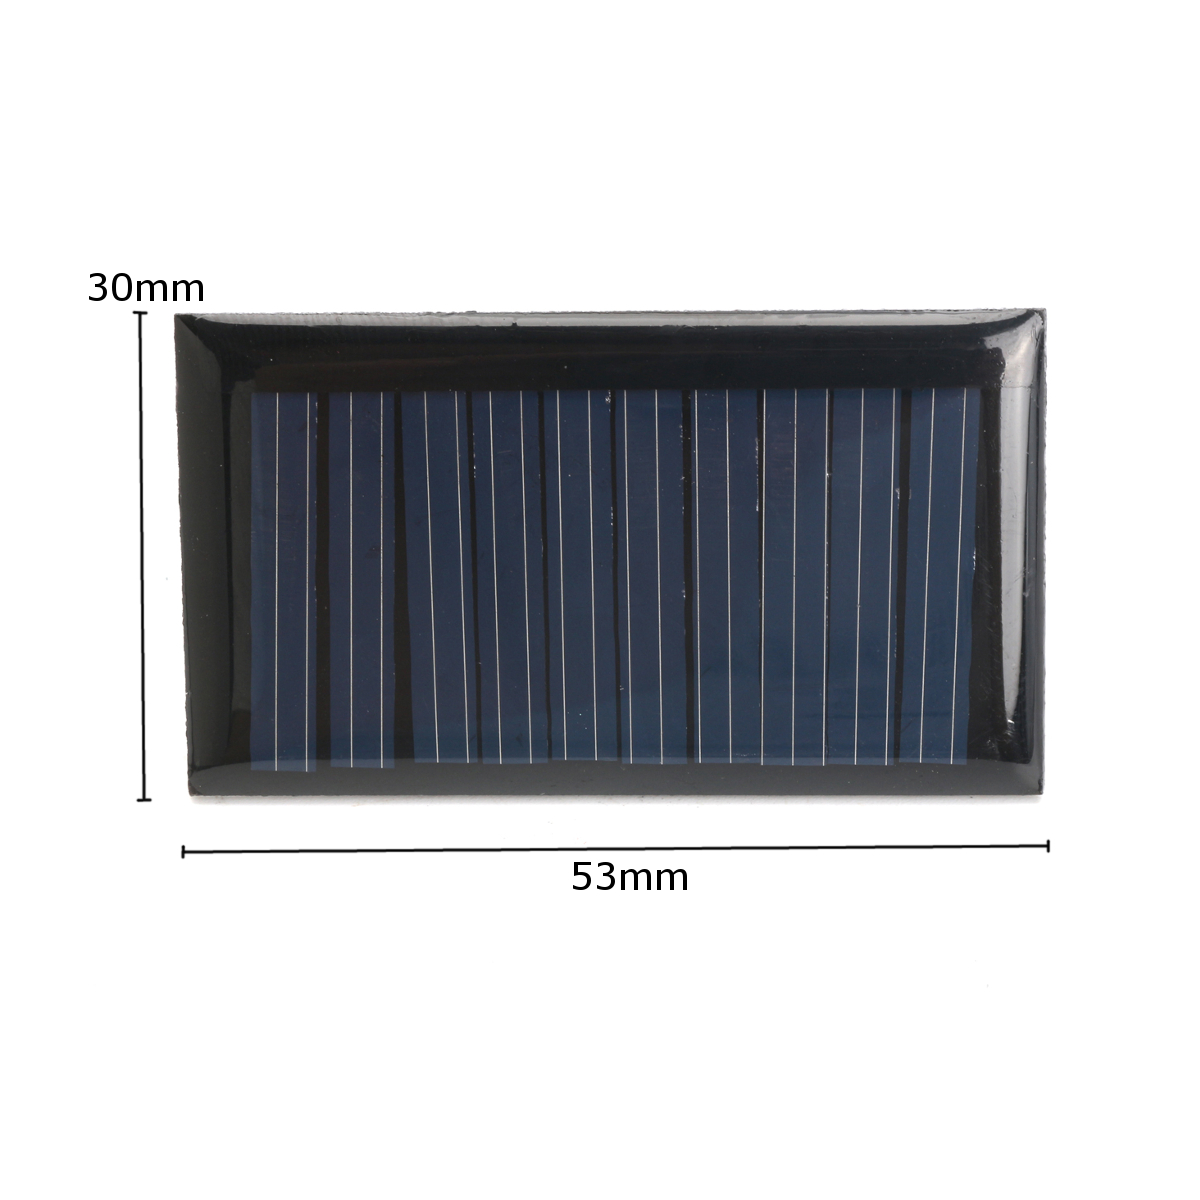 10Pcs-5V-30mA-53X30mm-Micro-Mini-Small-Power-Solar-Cells-Panel-For-DIY-Toy-1176705